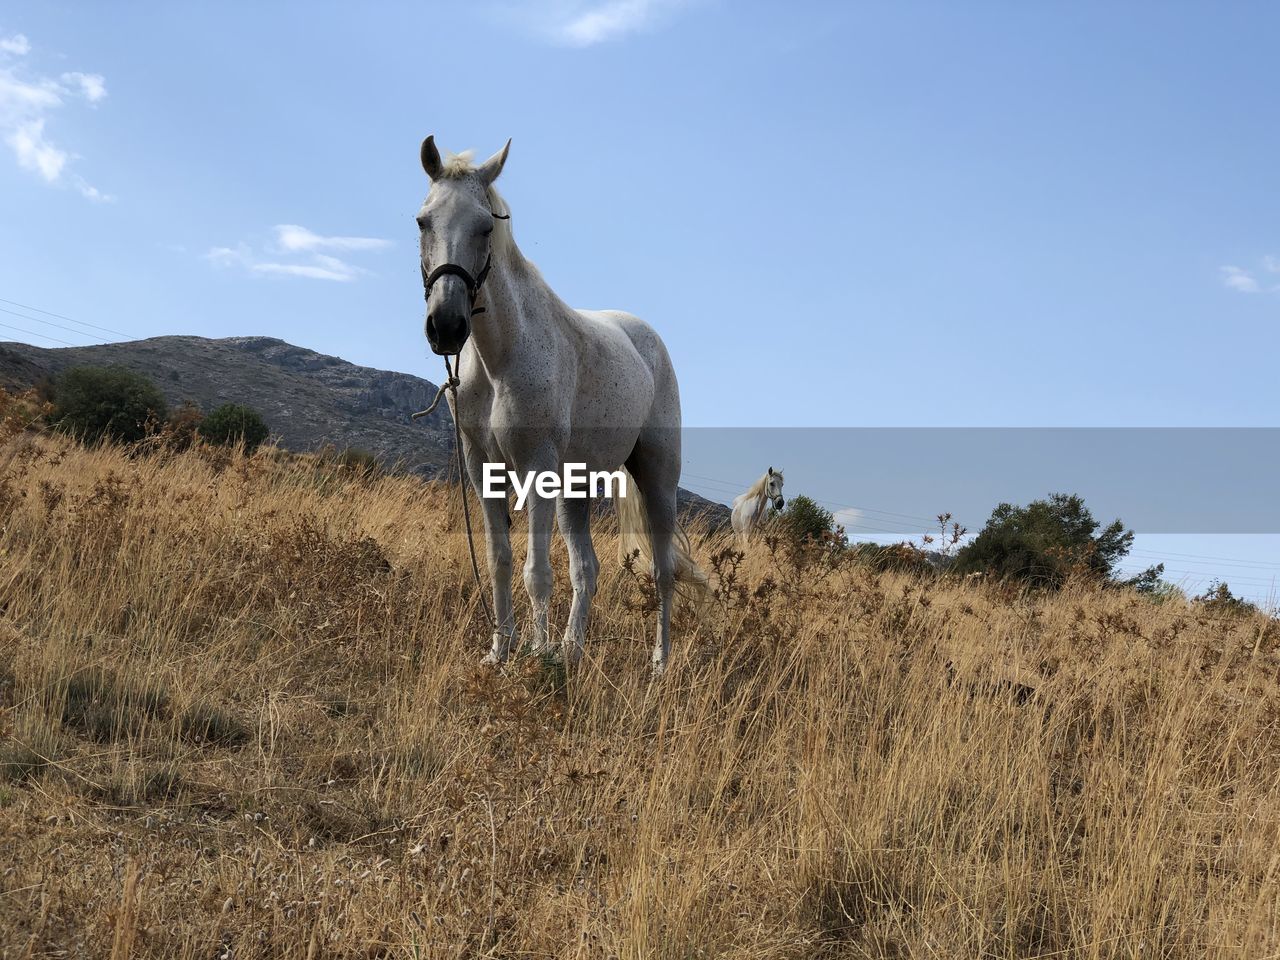 Horse on a hillside